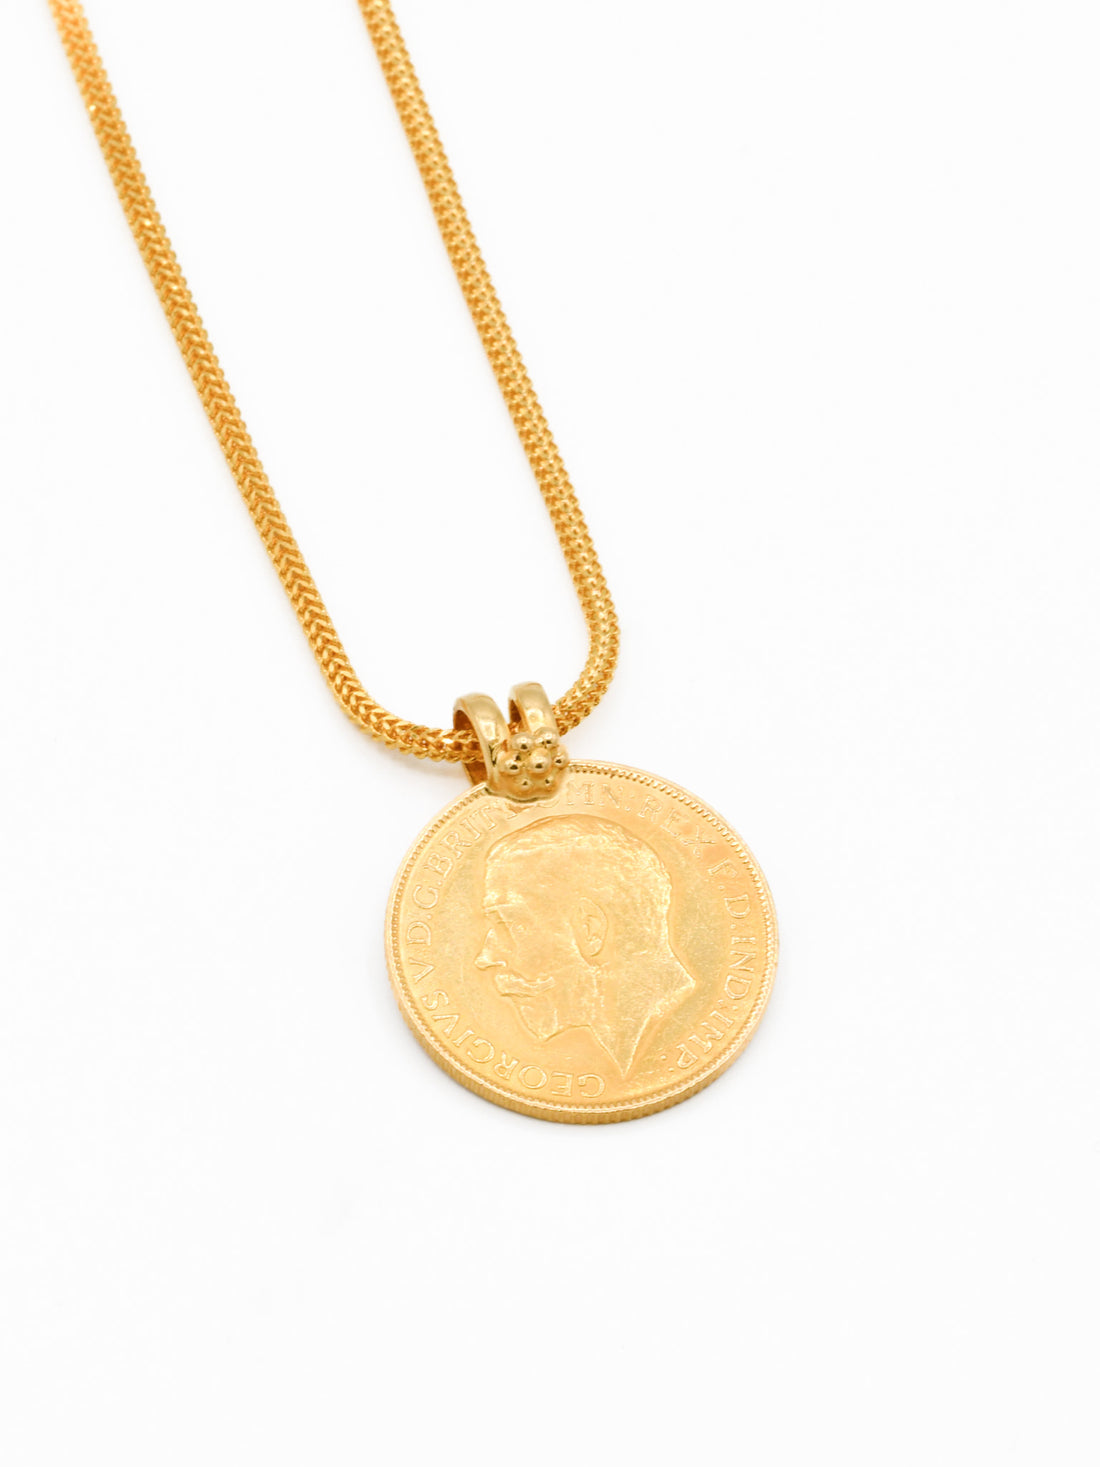 22ct Gold Full Sovereign pendant - Roop Darshan